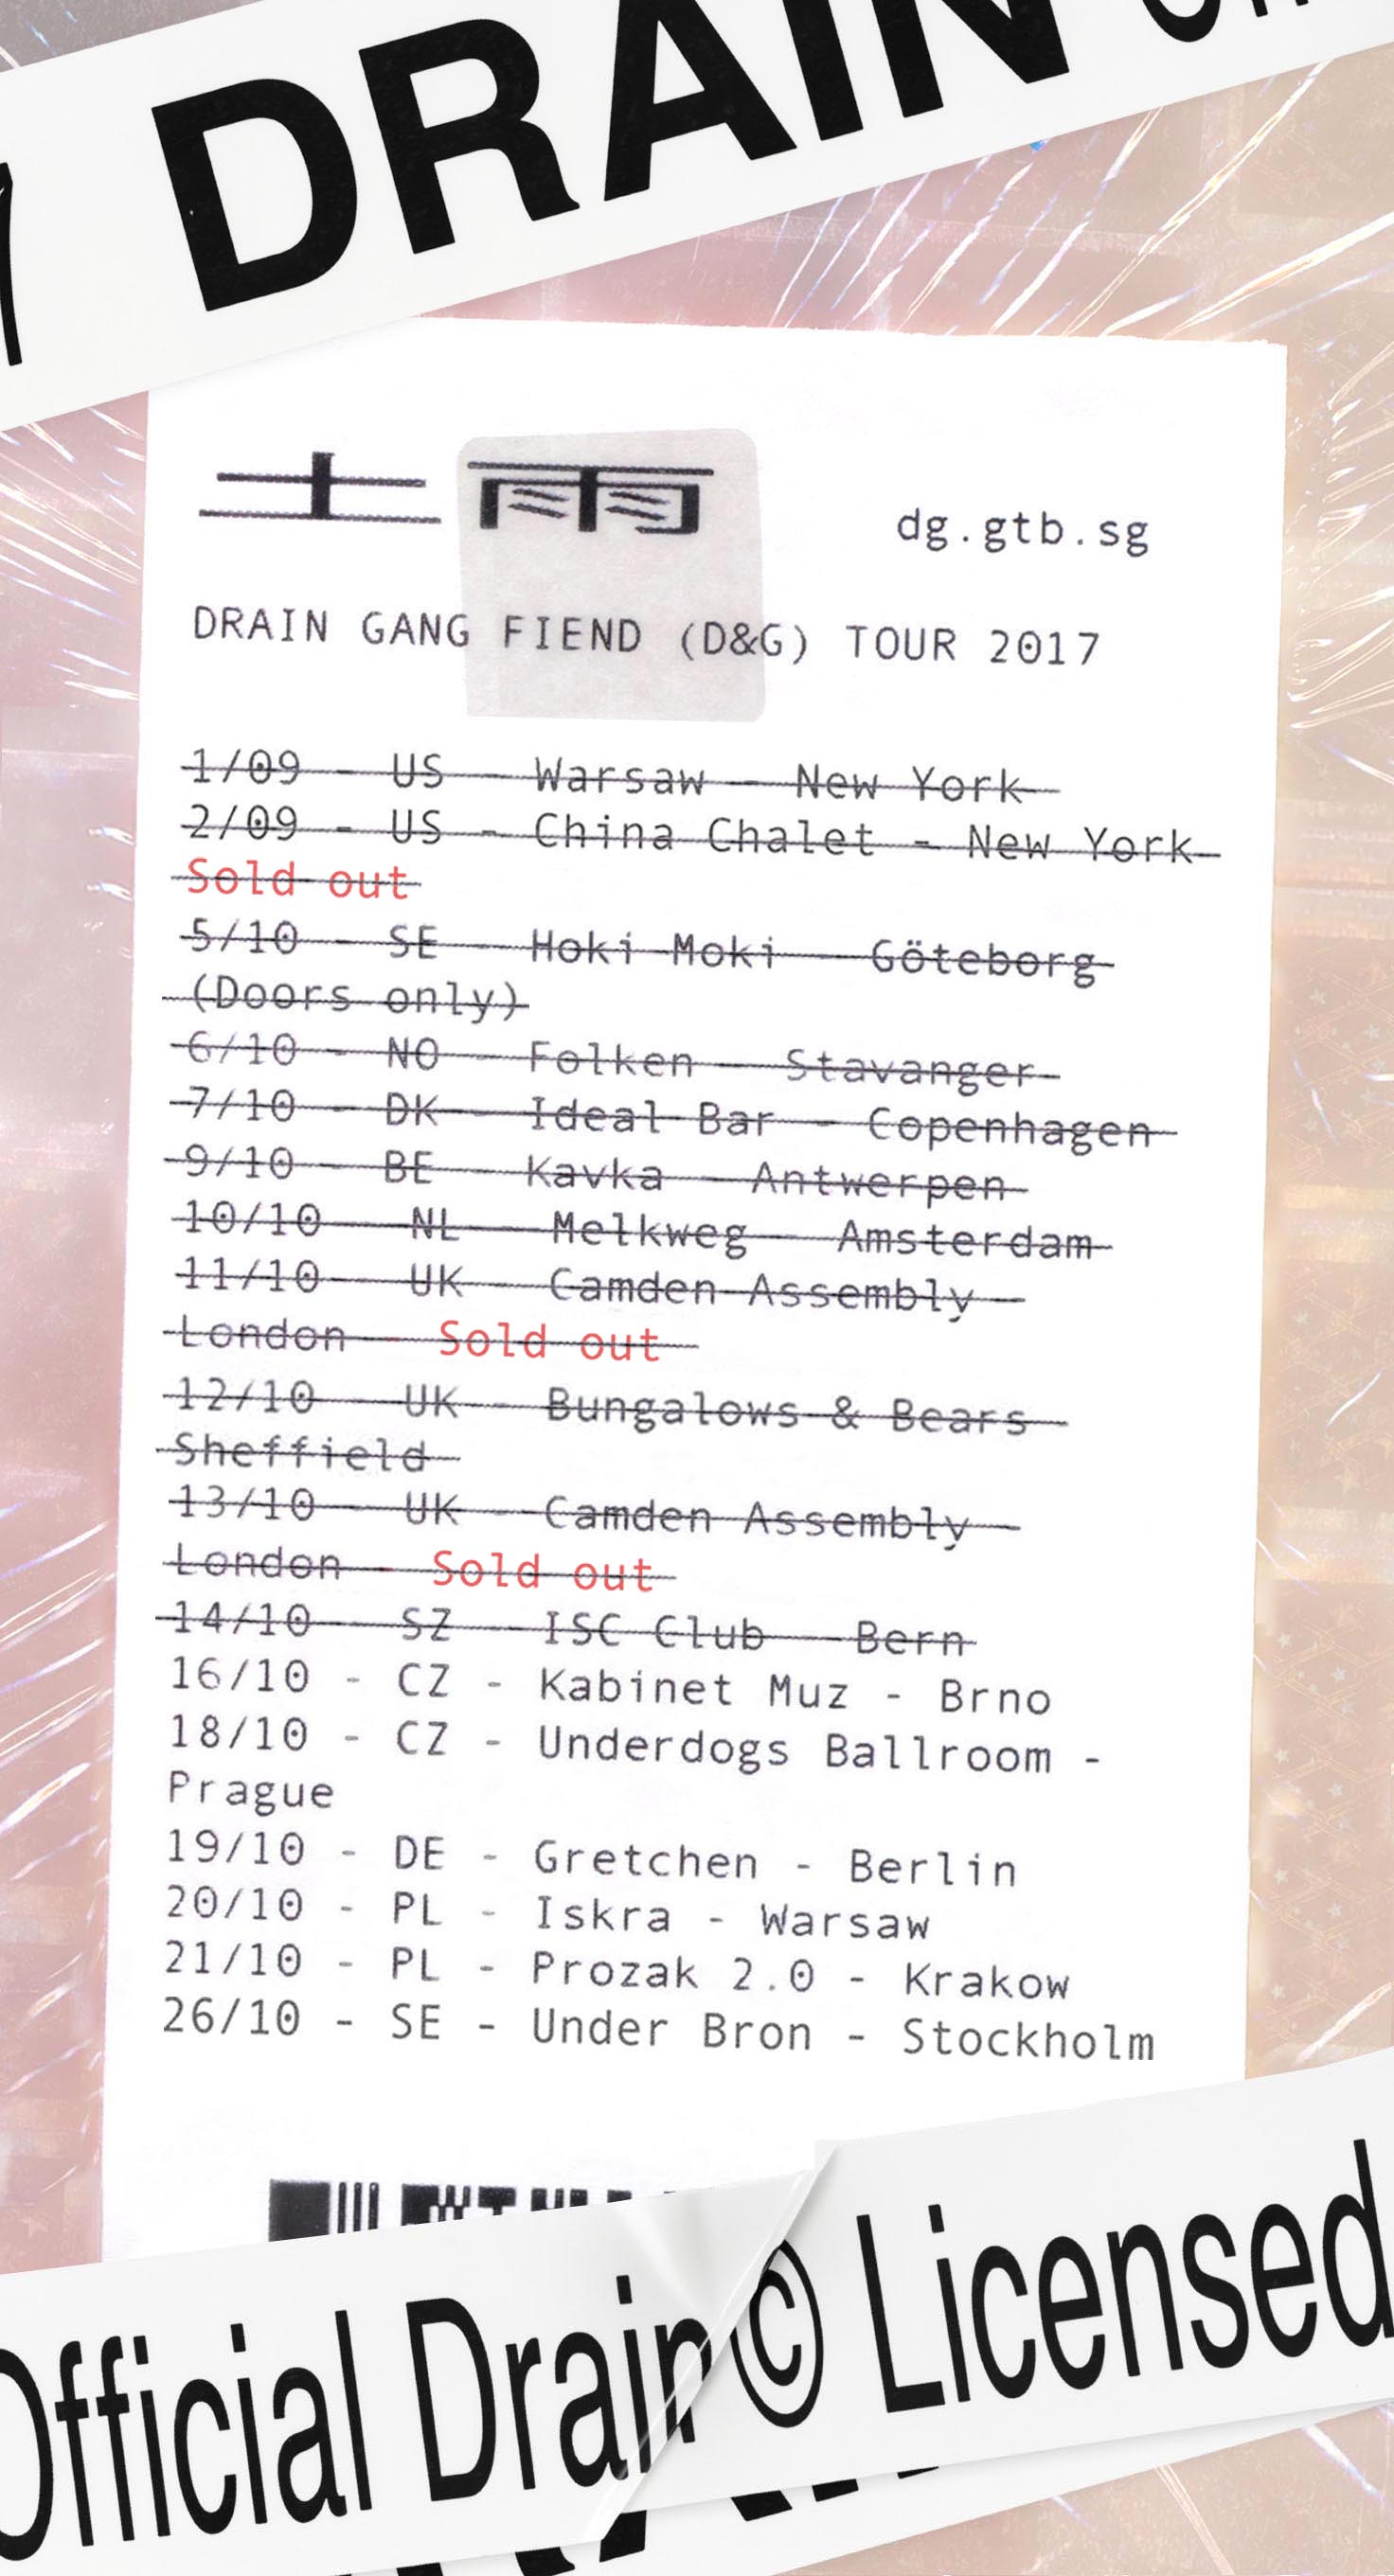 Drain Gang Fiend (D&G) Tour 2017